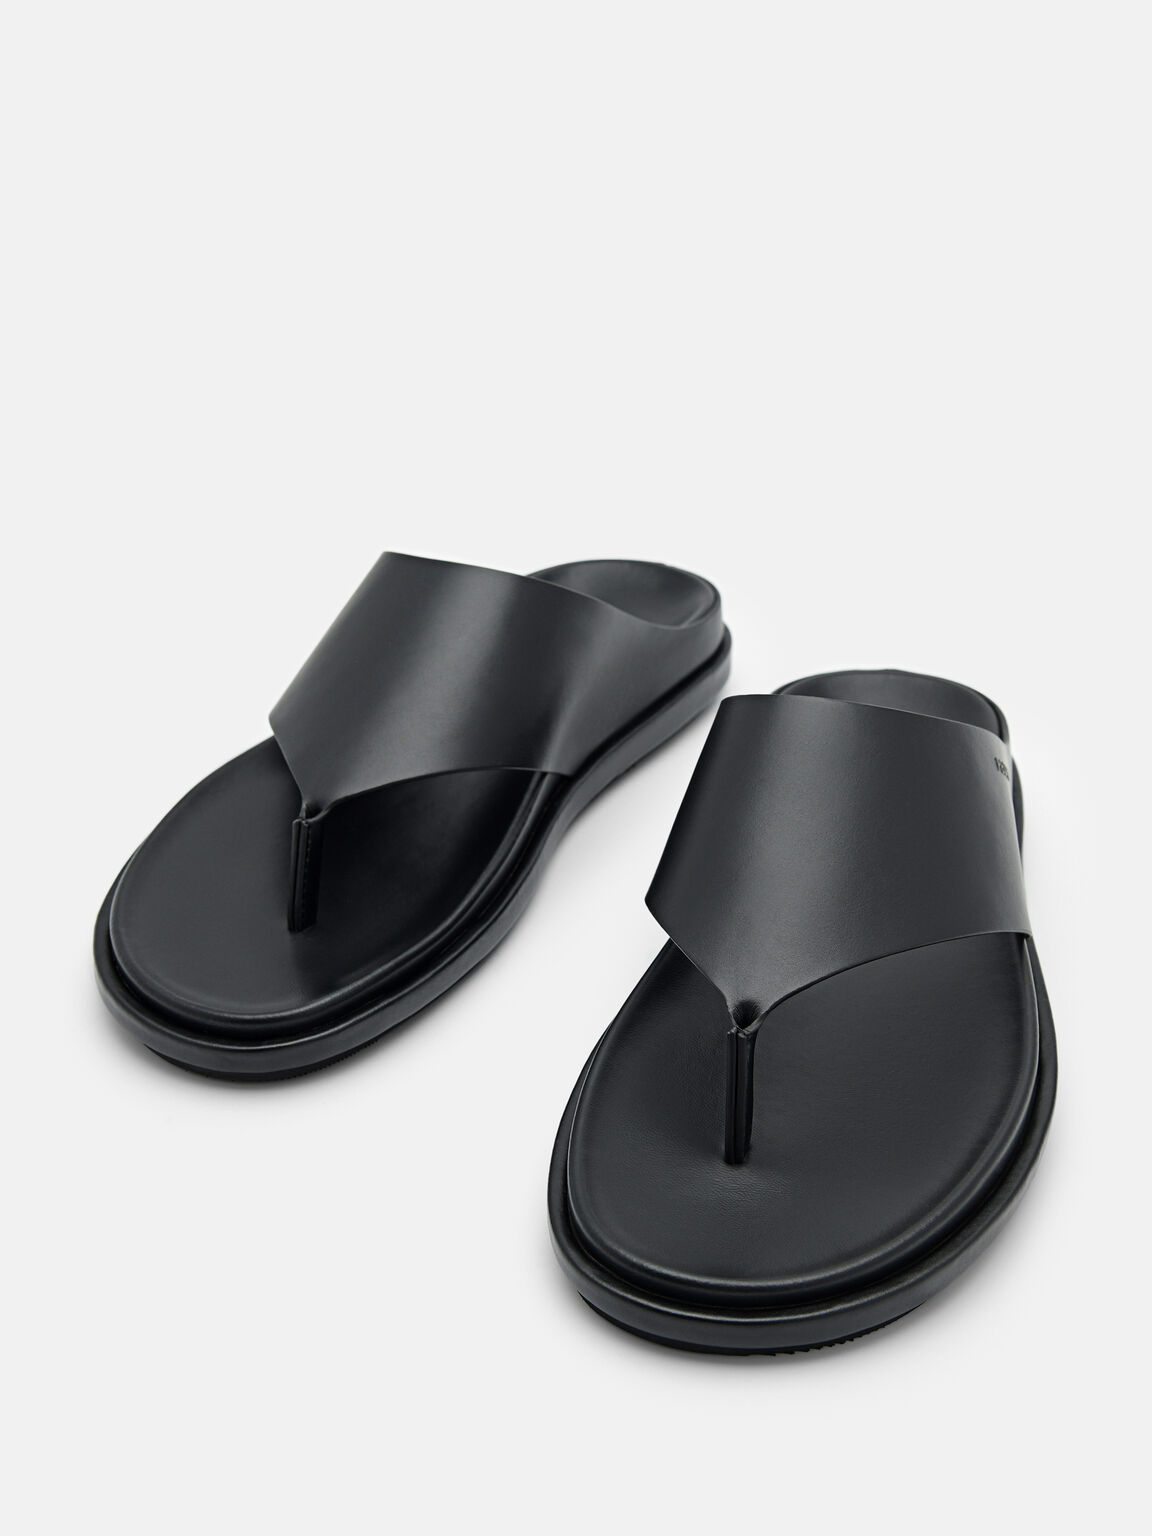 Microfiber Thong Sandals, Black